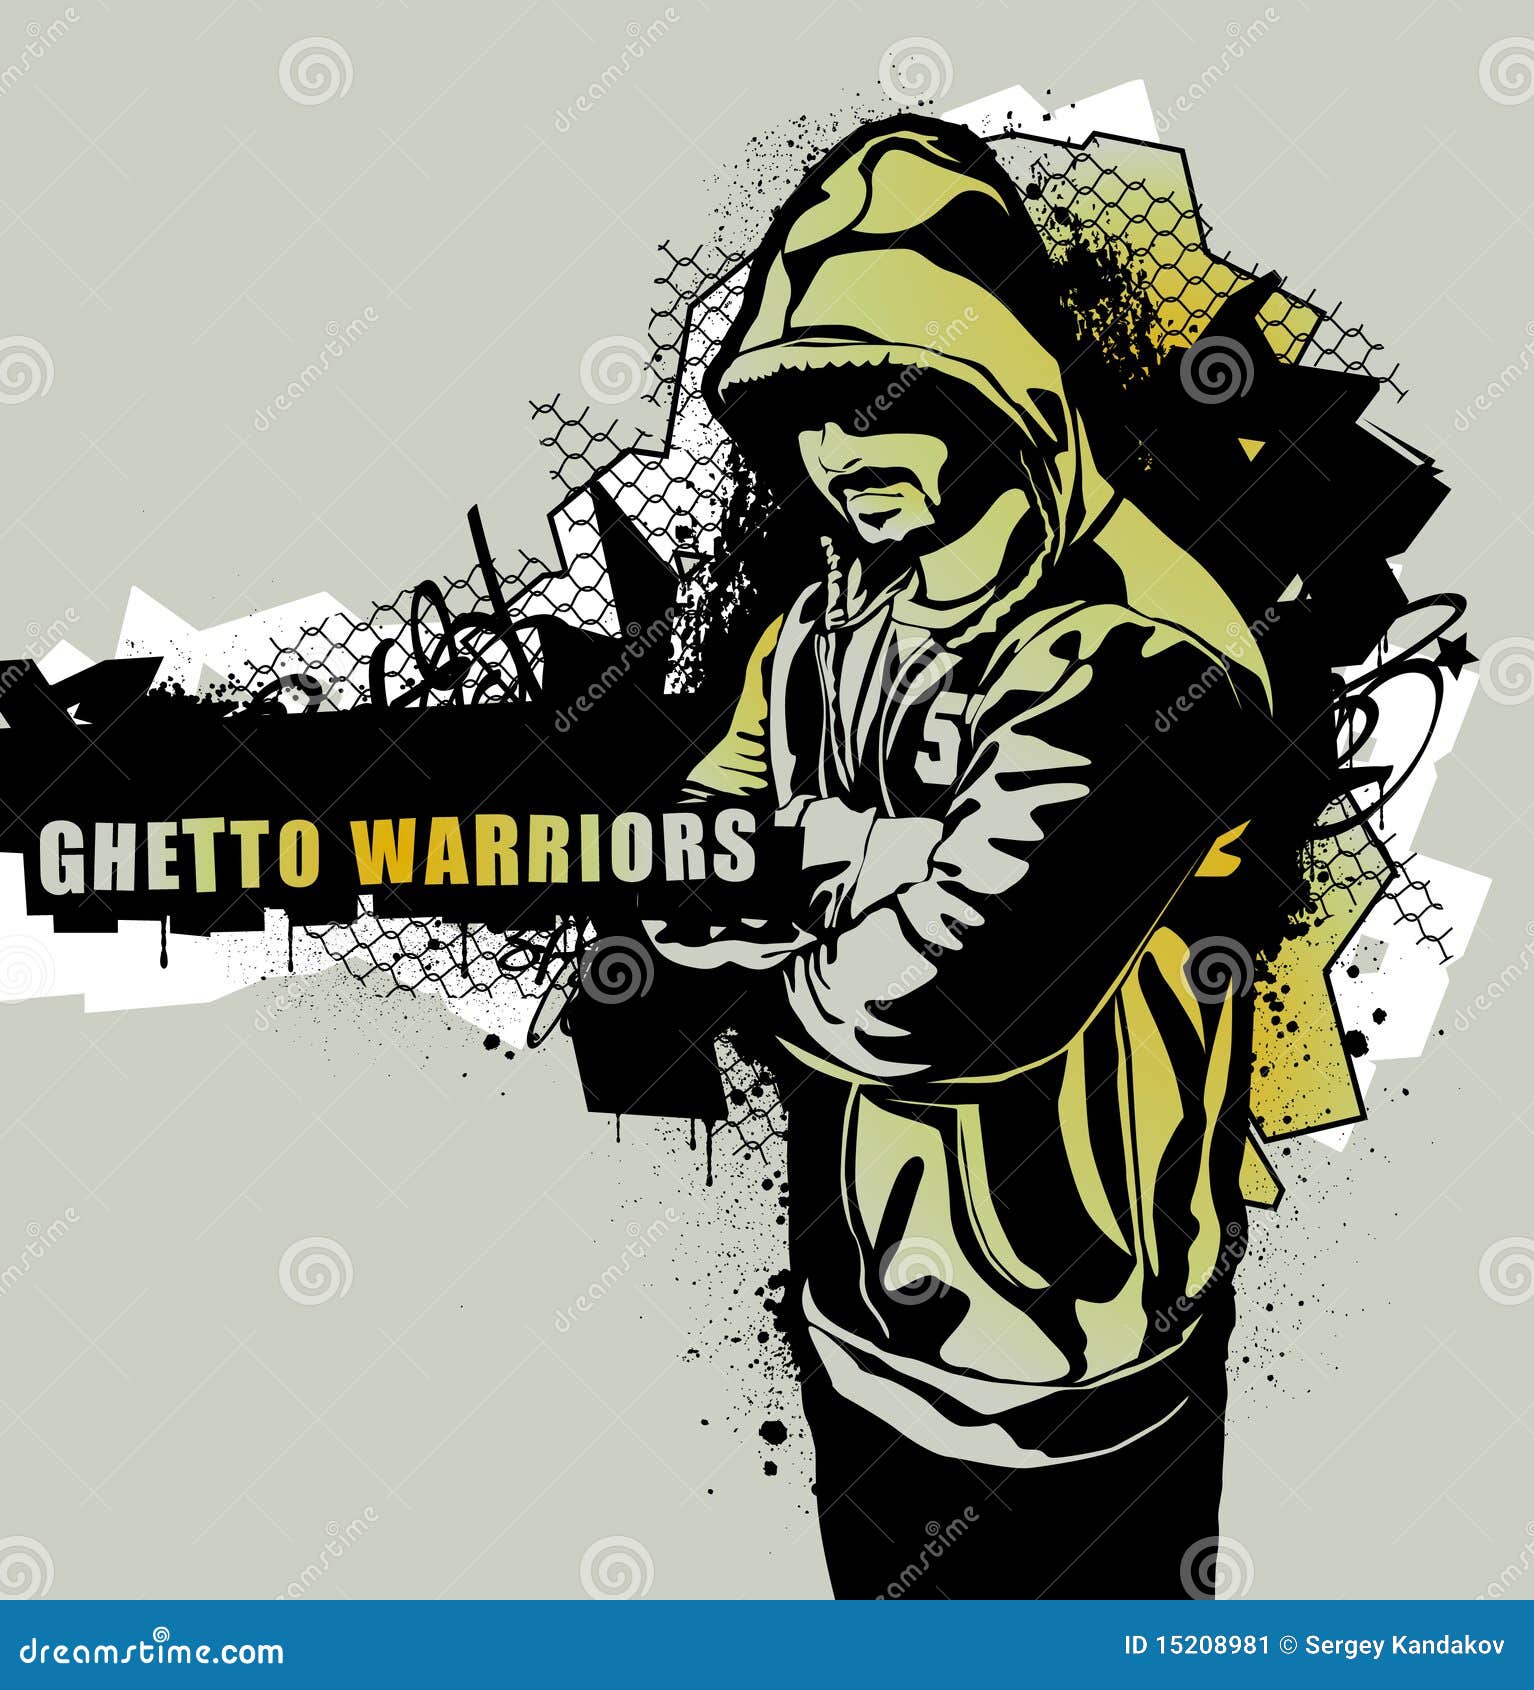 ghetto warriors